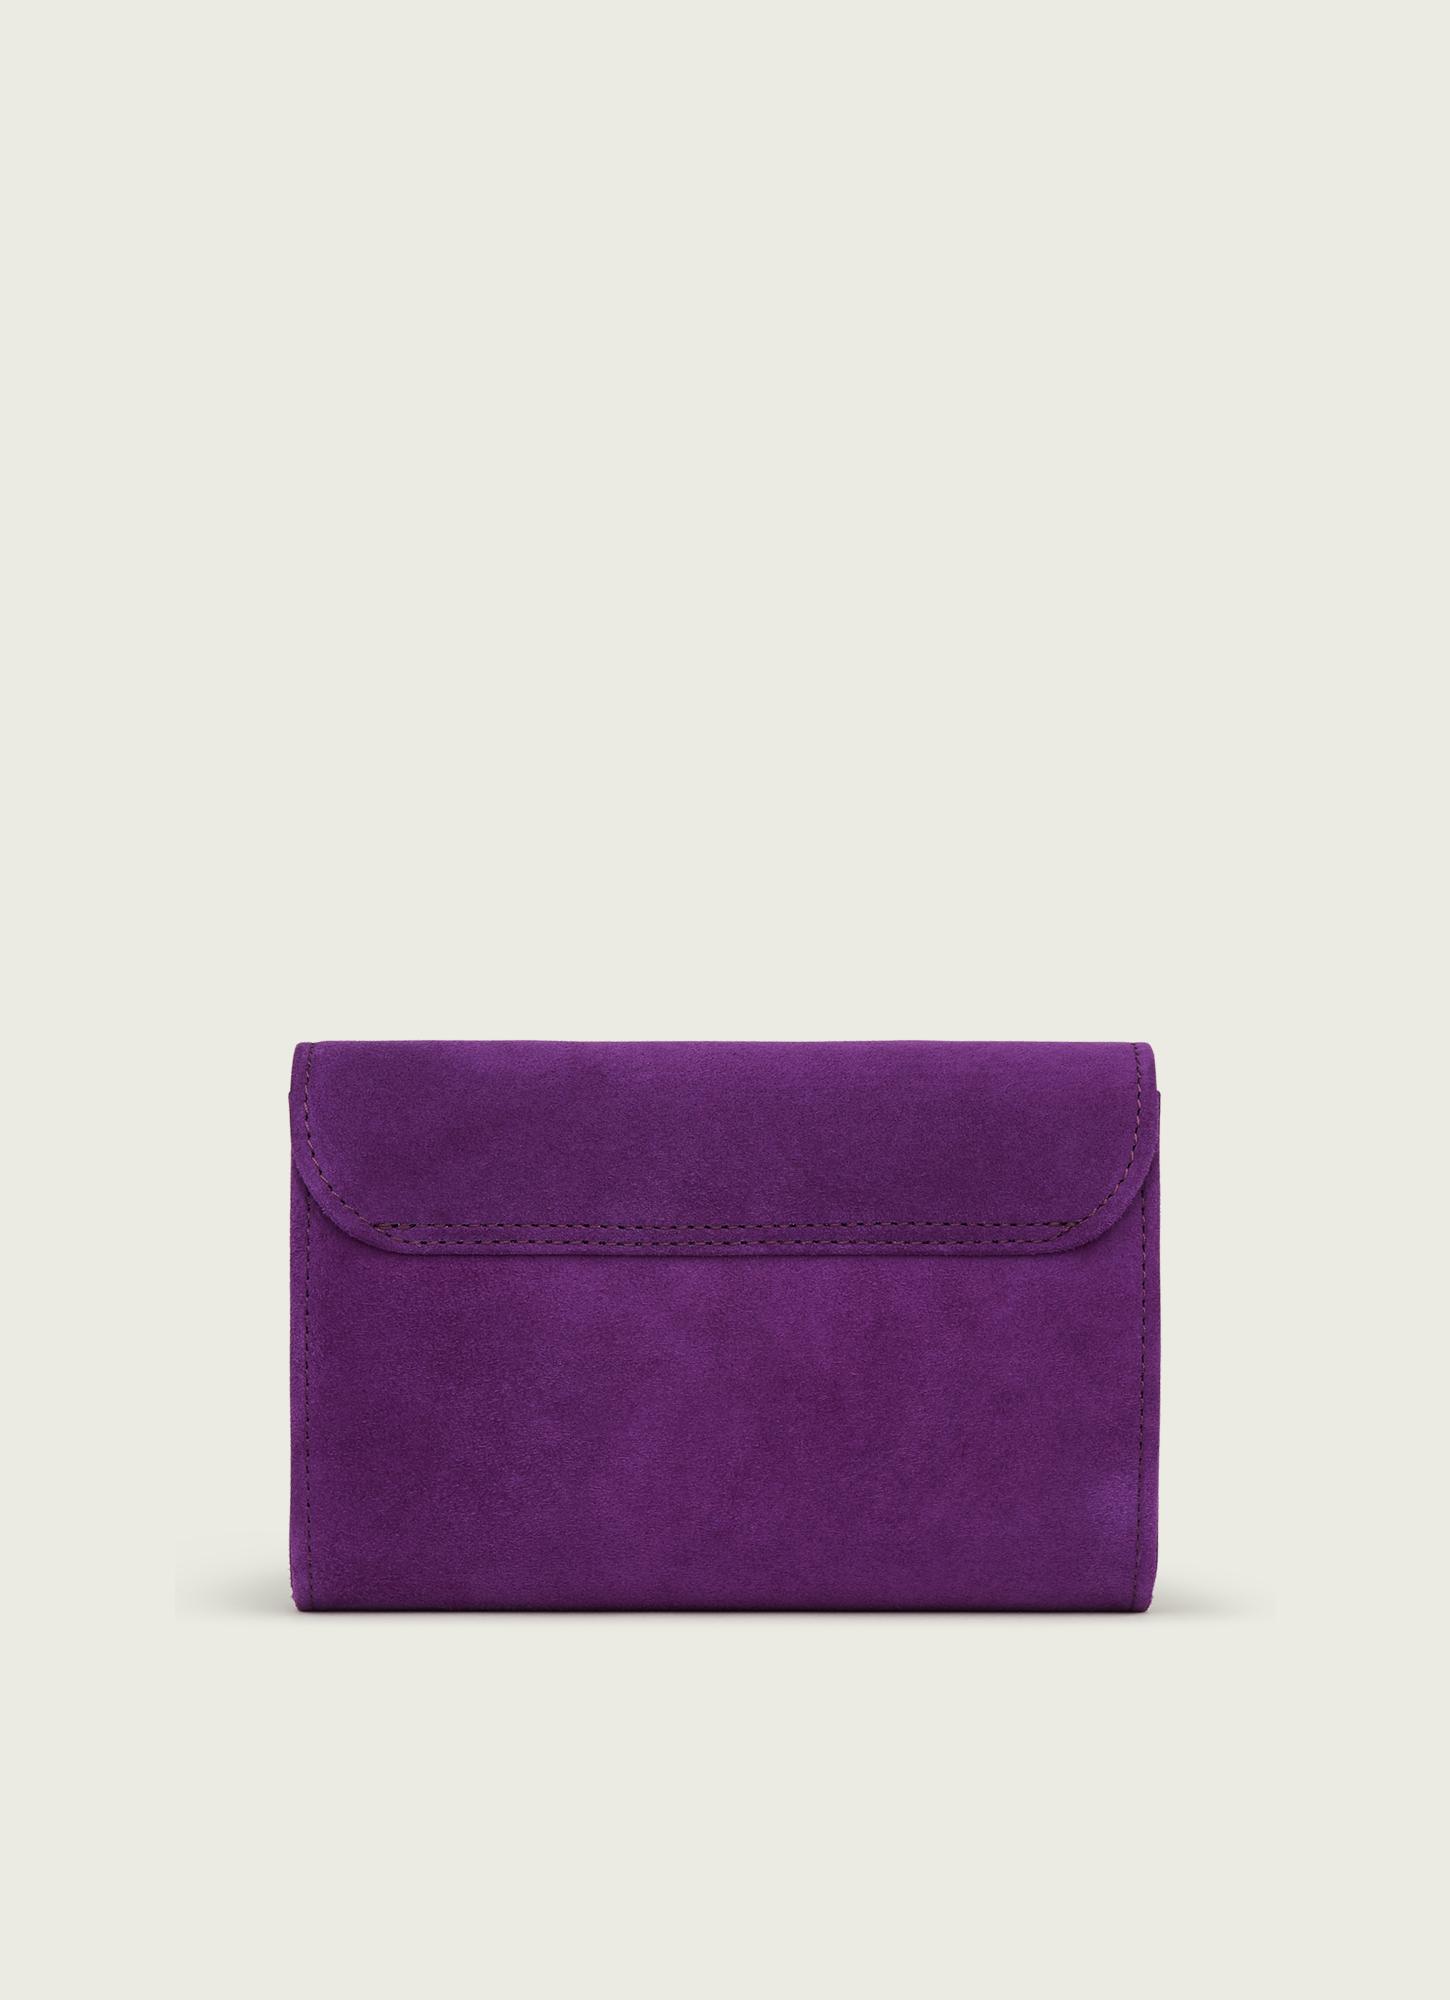 Mulberry Alexa Mini Leather Satchel Cross-body Bag in Purple | Lyst